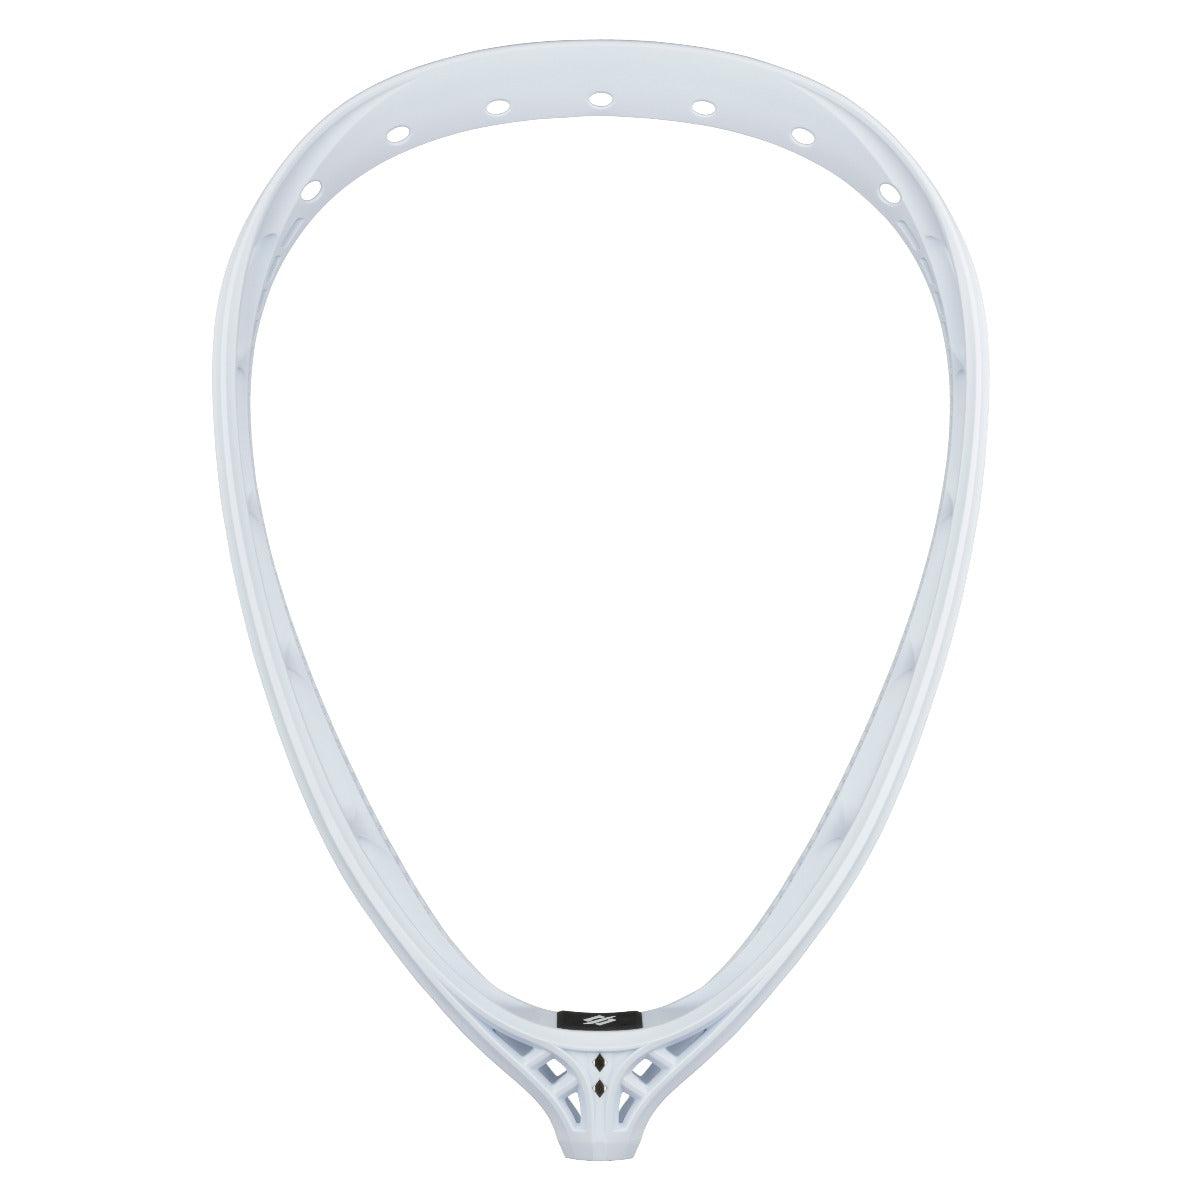 Stringking Mark 2G Lacrosse Goalie Head-Universal Lacrosse